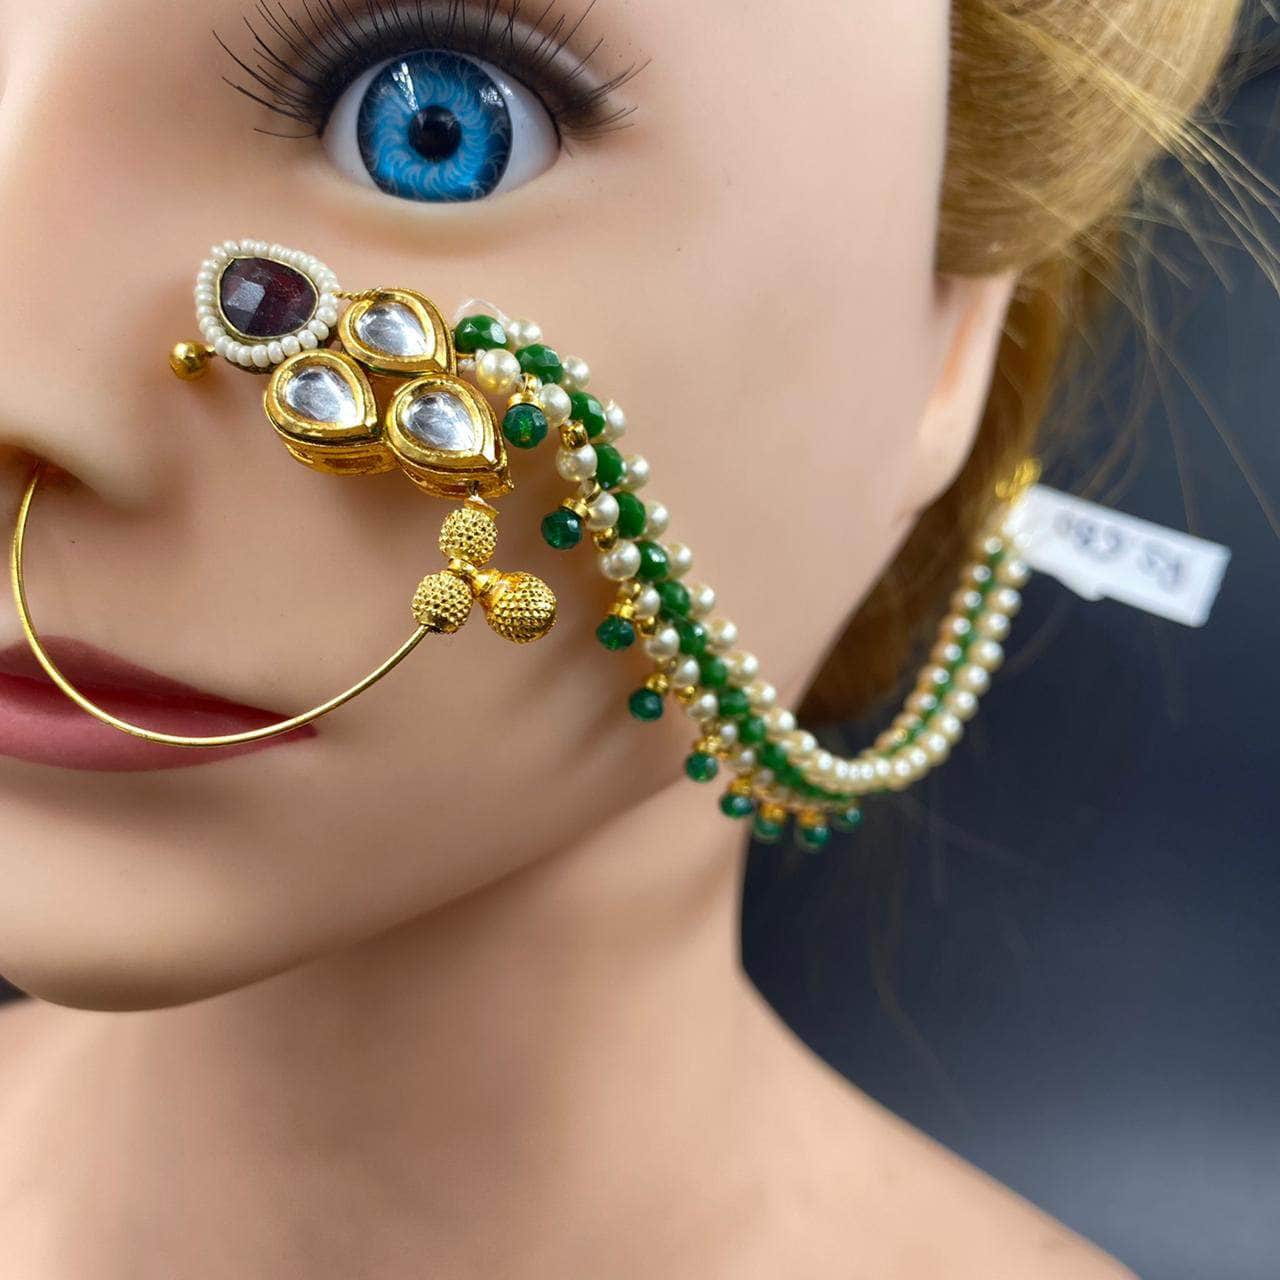 Fancy Designer Silver Plated Nose Ring For Women, सिल्वर नोज़ रिंग्स, चांदी  की नाक की बाली, सिल्वर नोज रिंग - Rehma Enterprises, Goa | ID: 25926314933